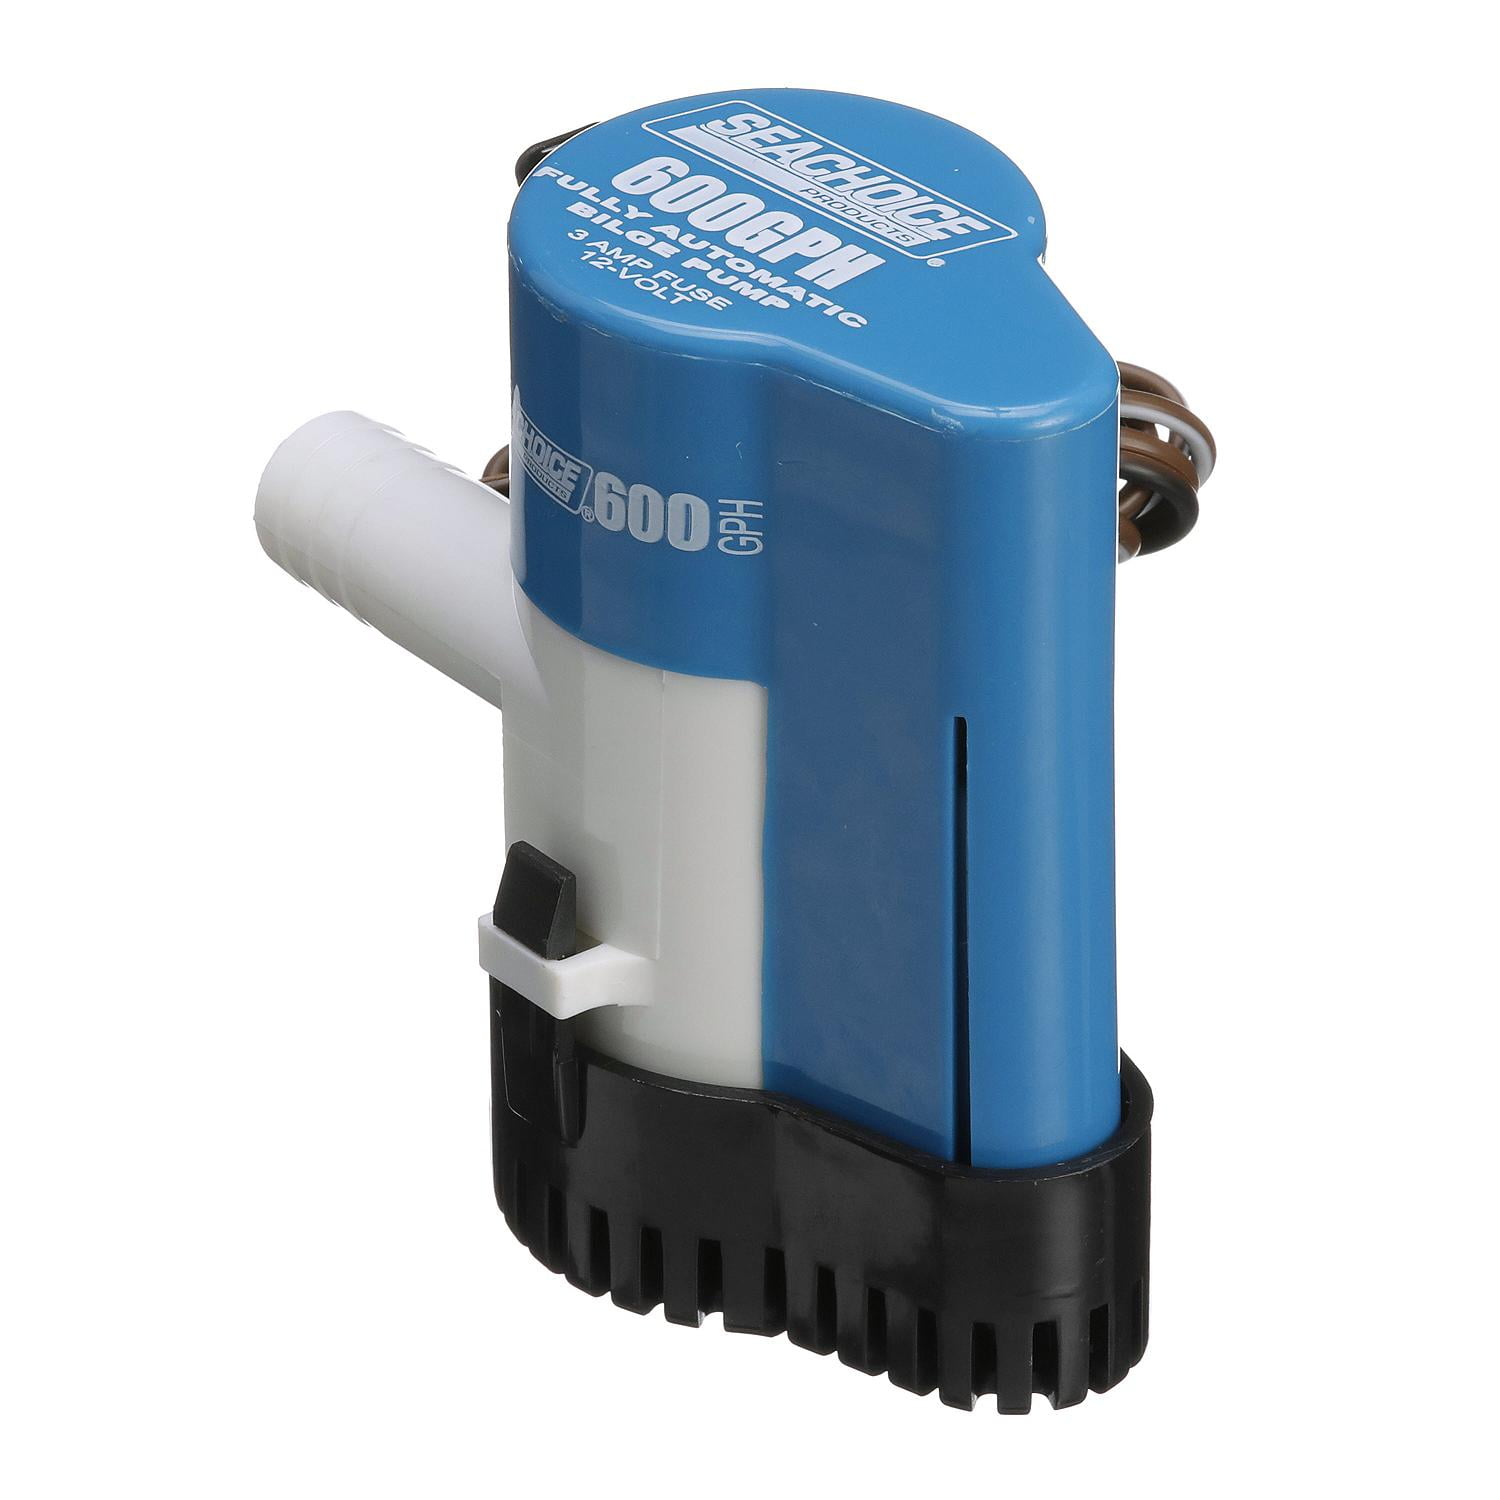 Sea-Dog 12-Volt Premium Electric Oil Pump 501072-3 - The Home Depot